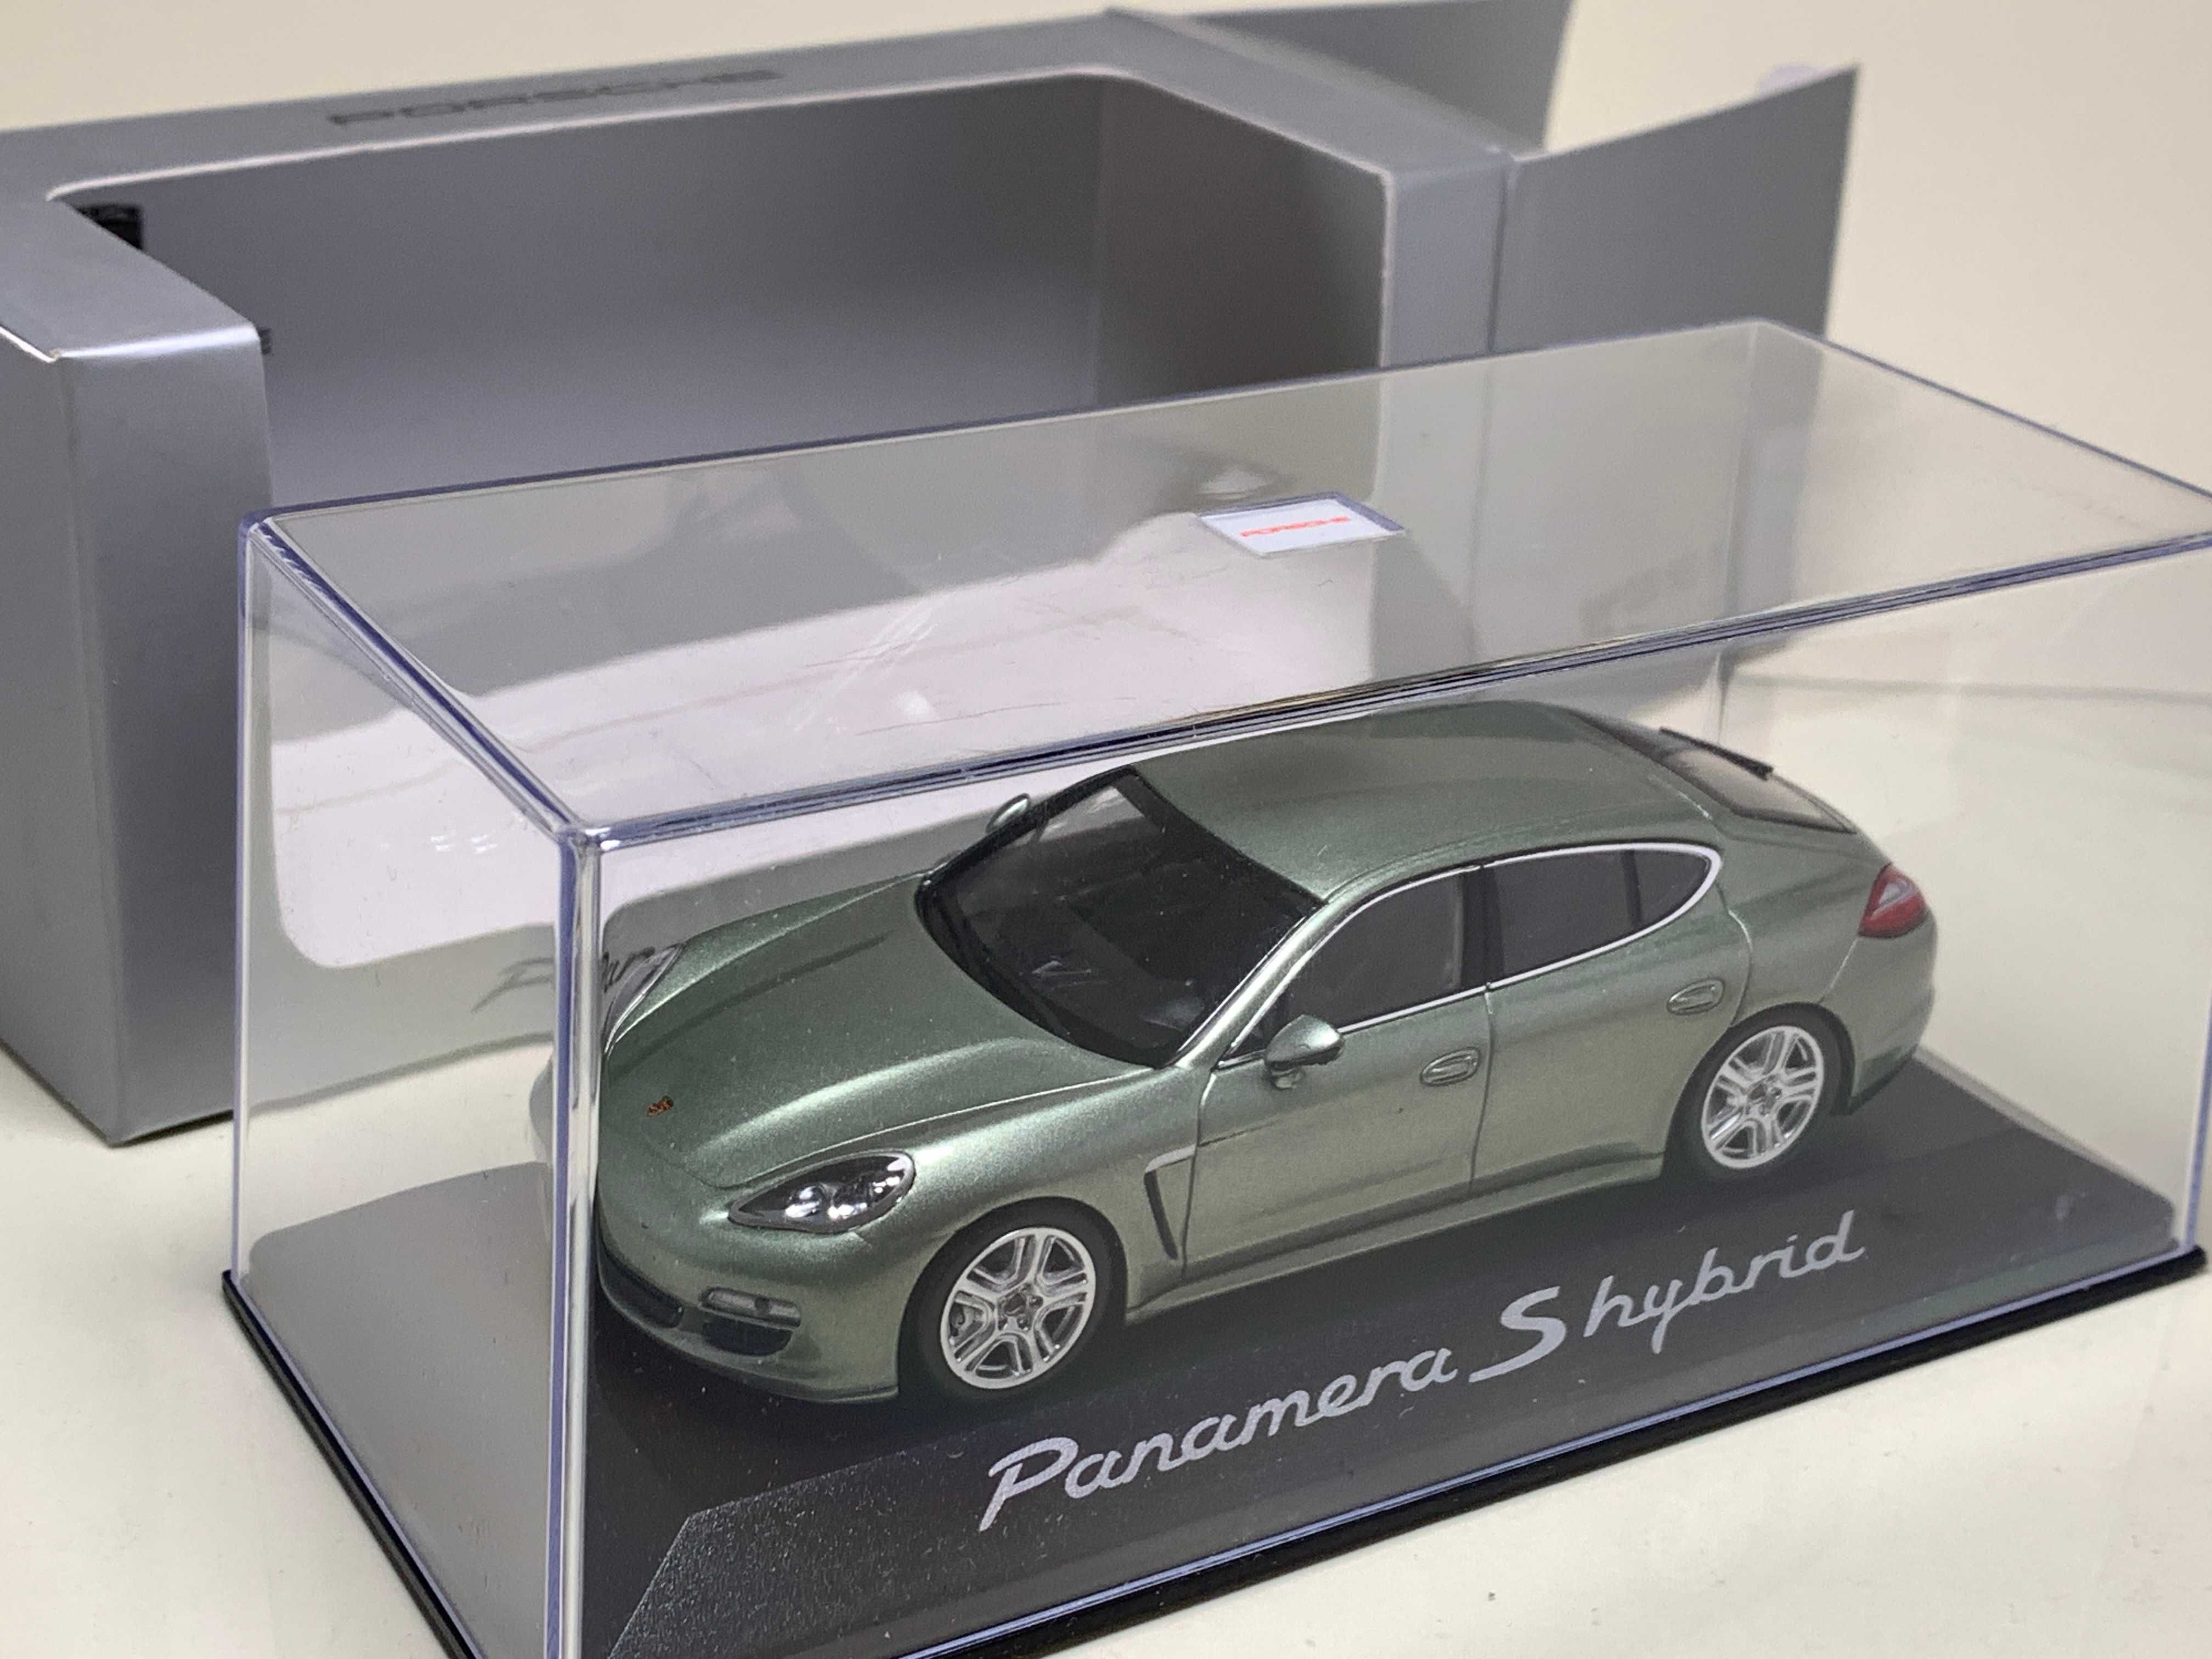 Porsche Panamera S Hybrid 1:43 Model Minichamps